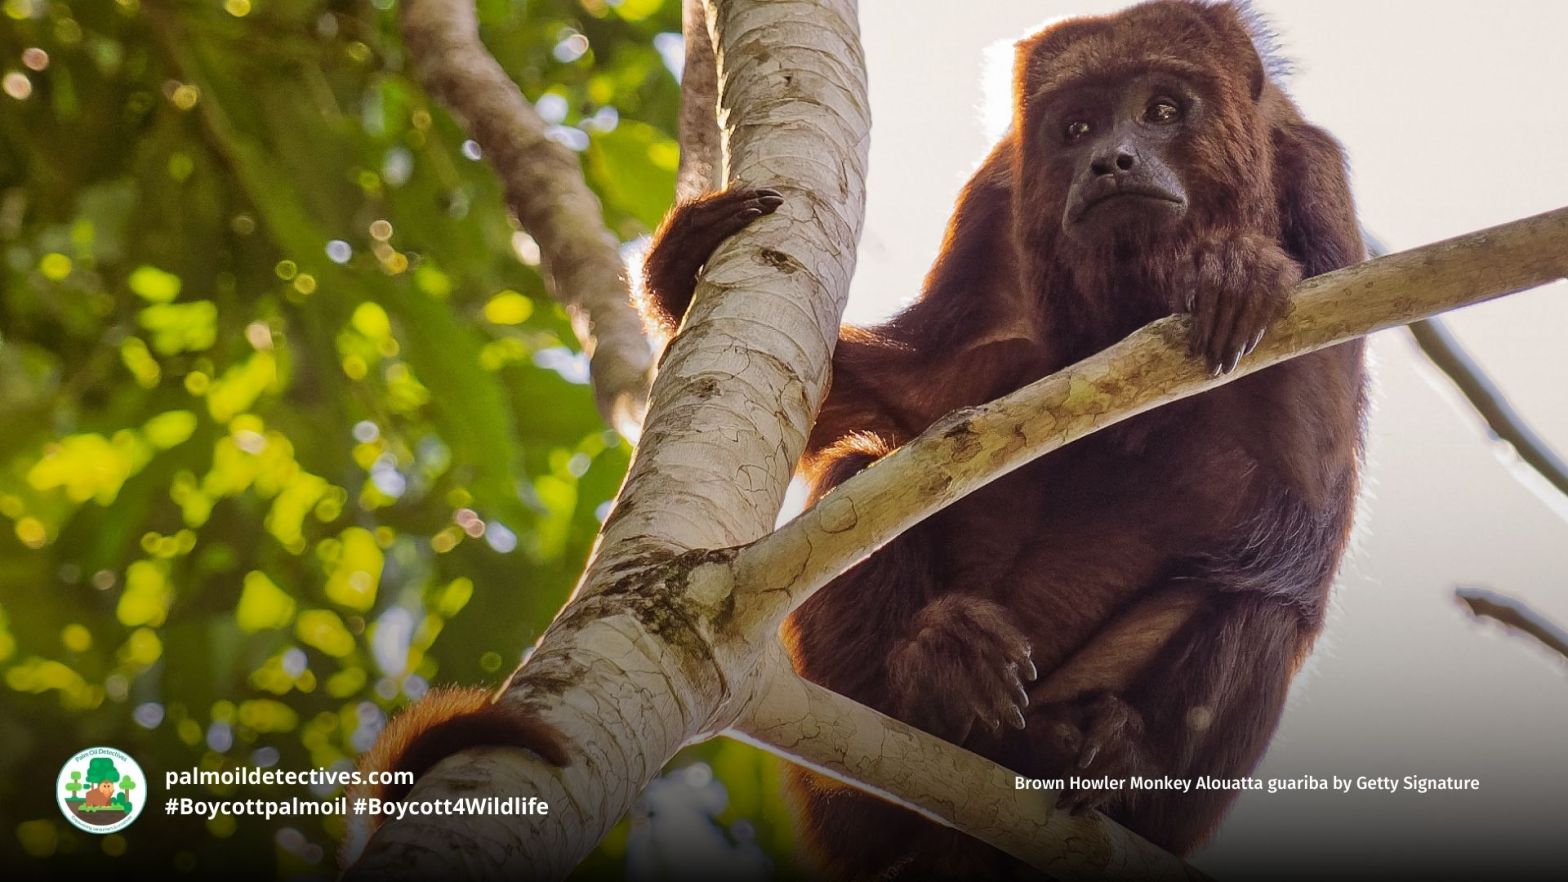 Brown Howler Monkey Alouatta guariba - South America